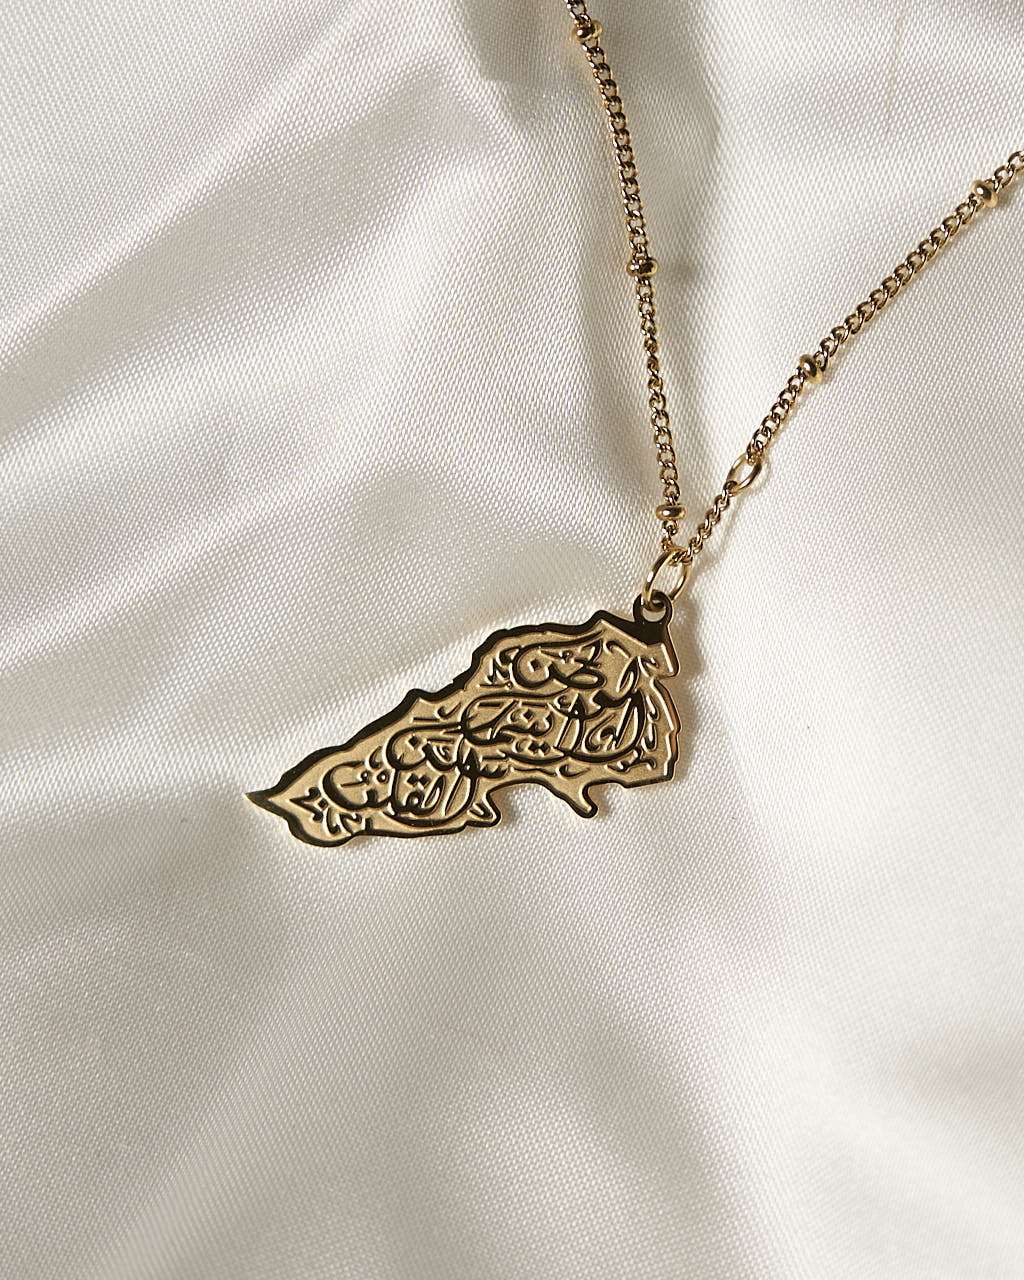 Lebanon Calligraphy Necklace - Necklace - Fajr Noor